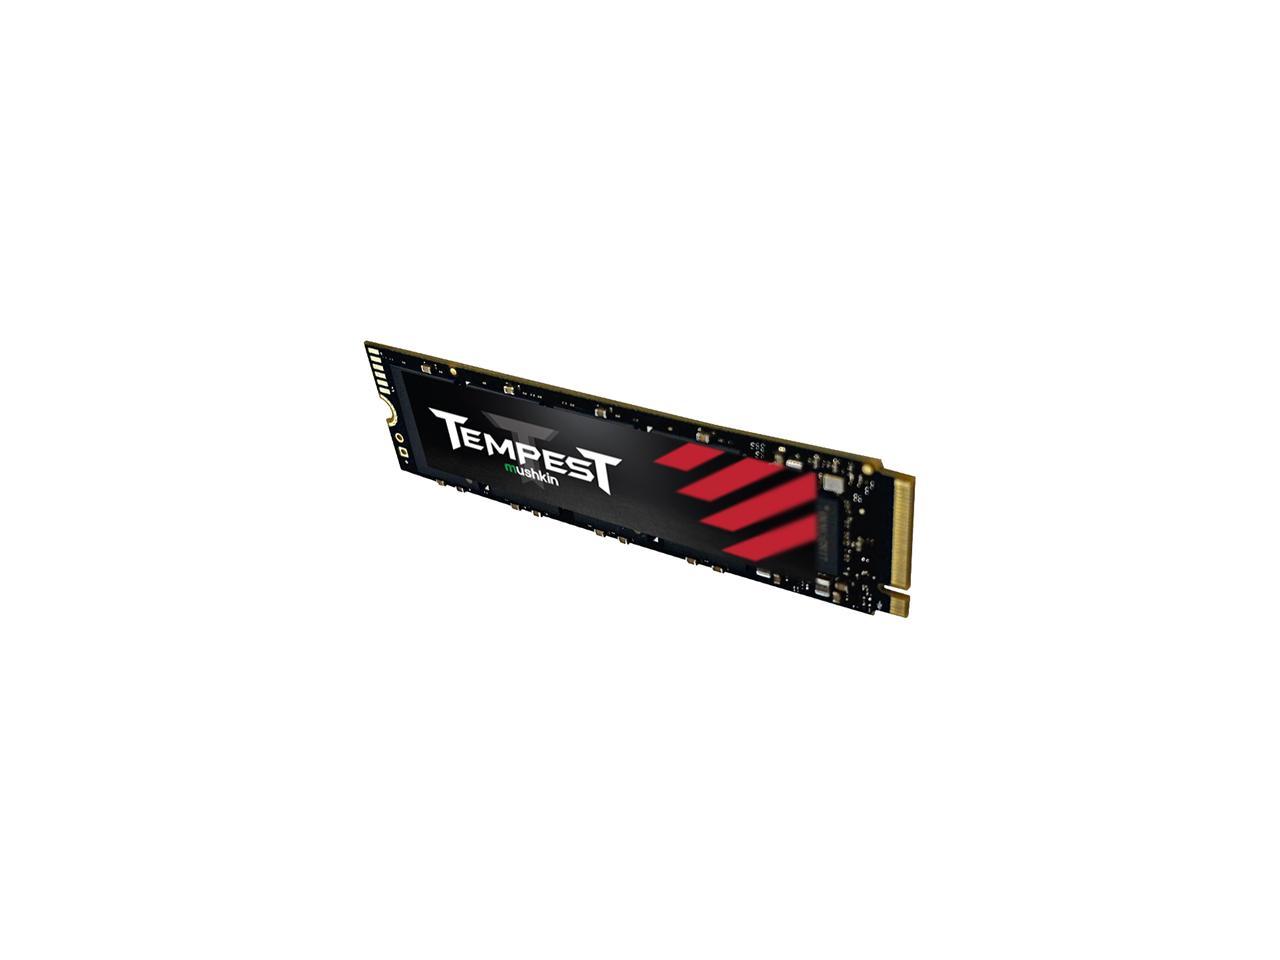 Mushkin Enhanced Tempest M.2 2280 256GB PCIe Gen3 x4 NVMe 1.4 3D NAND Internal Solid State Drive (SSD) MKNSSDTS256GB-D8